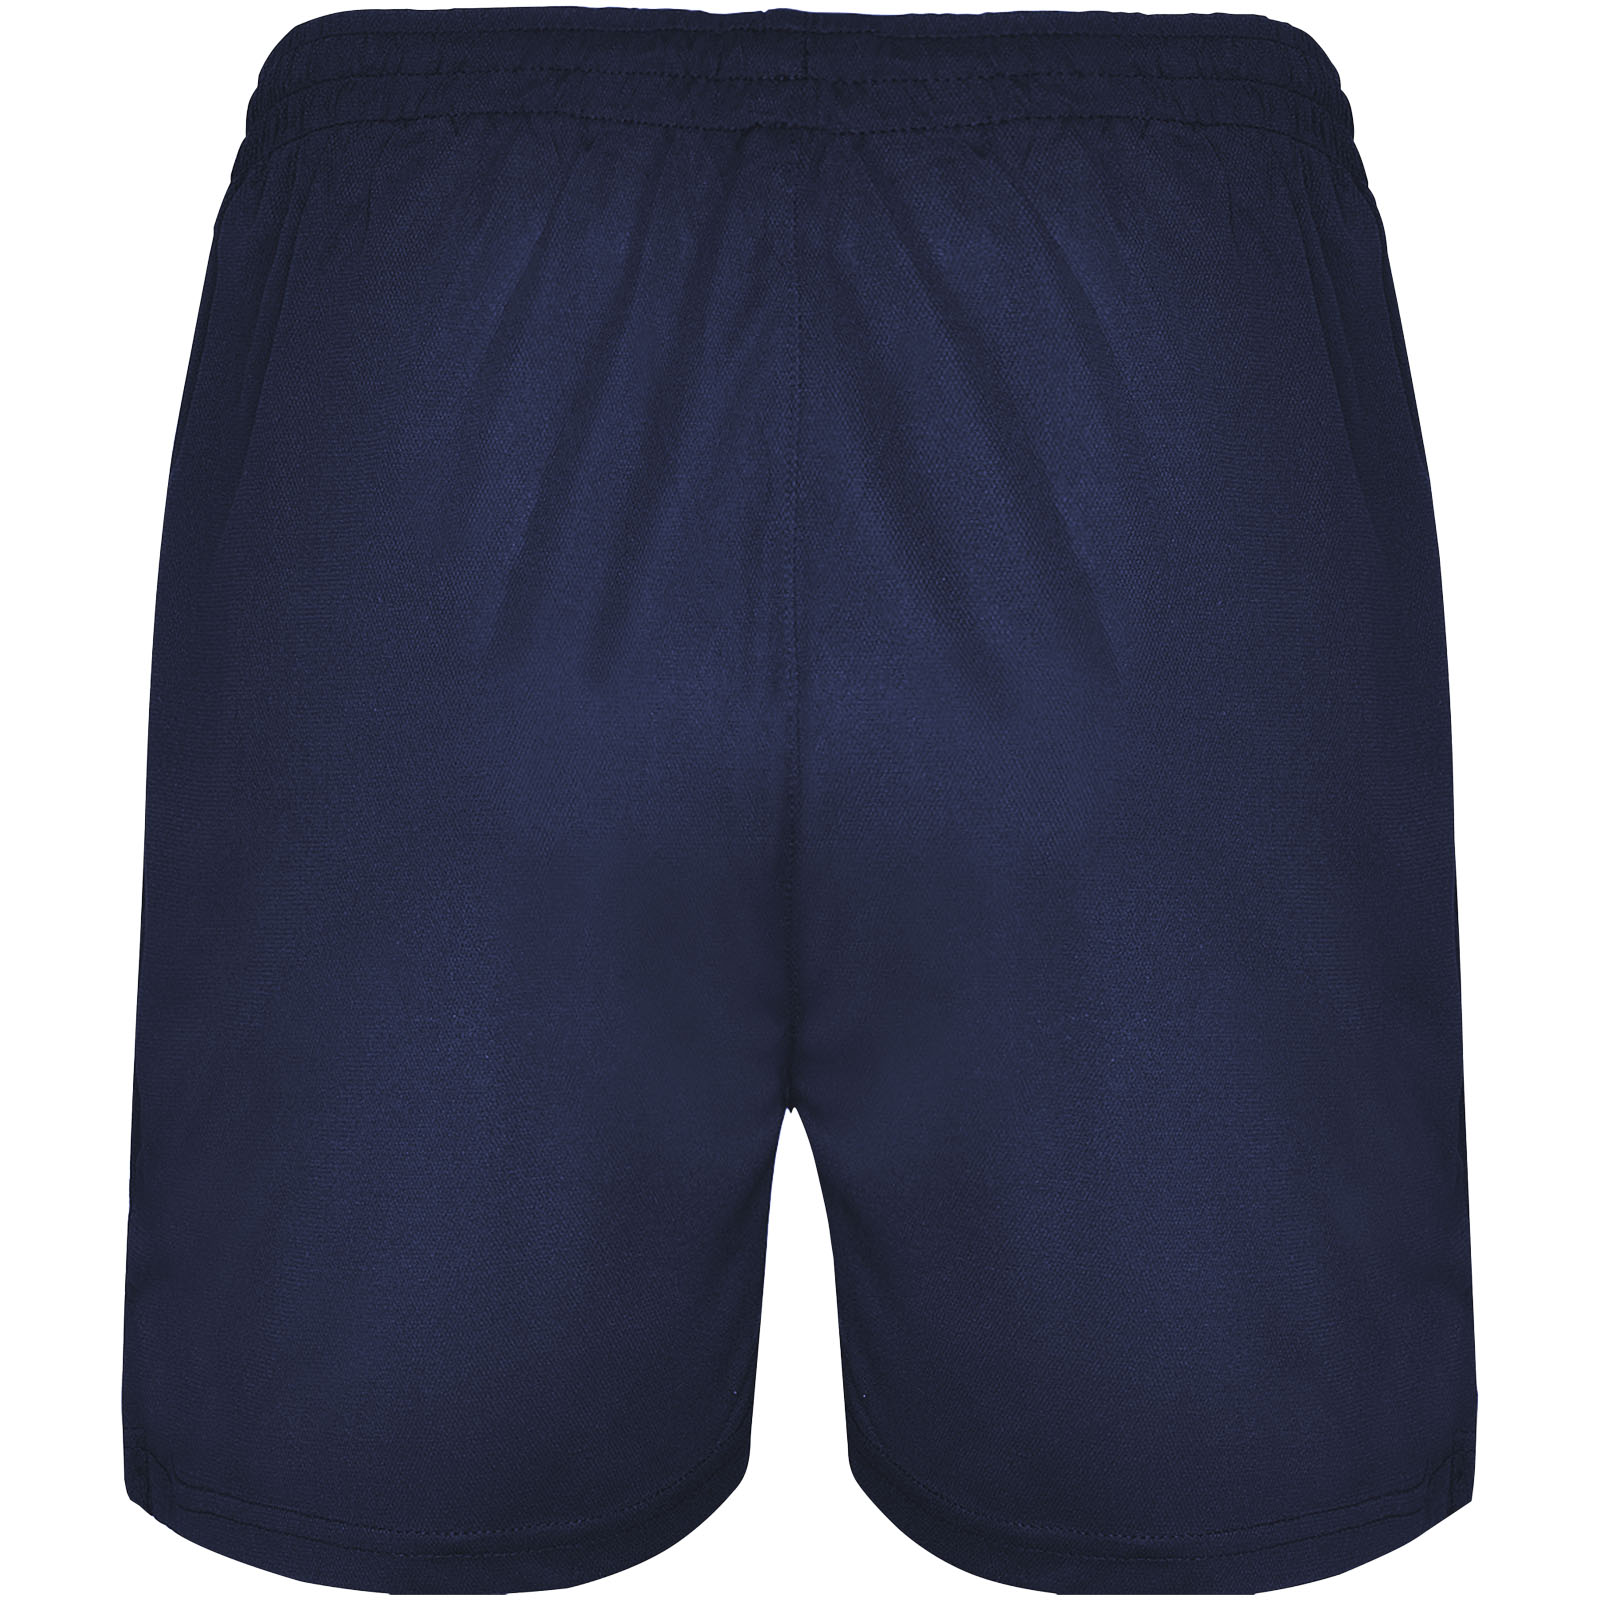 Advertising Shorts - Player kids sports shorts - 1